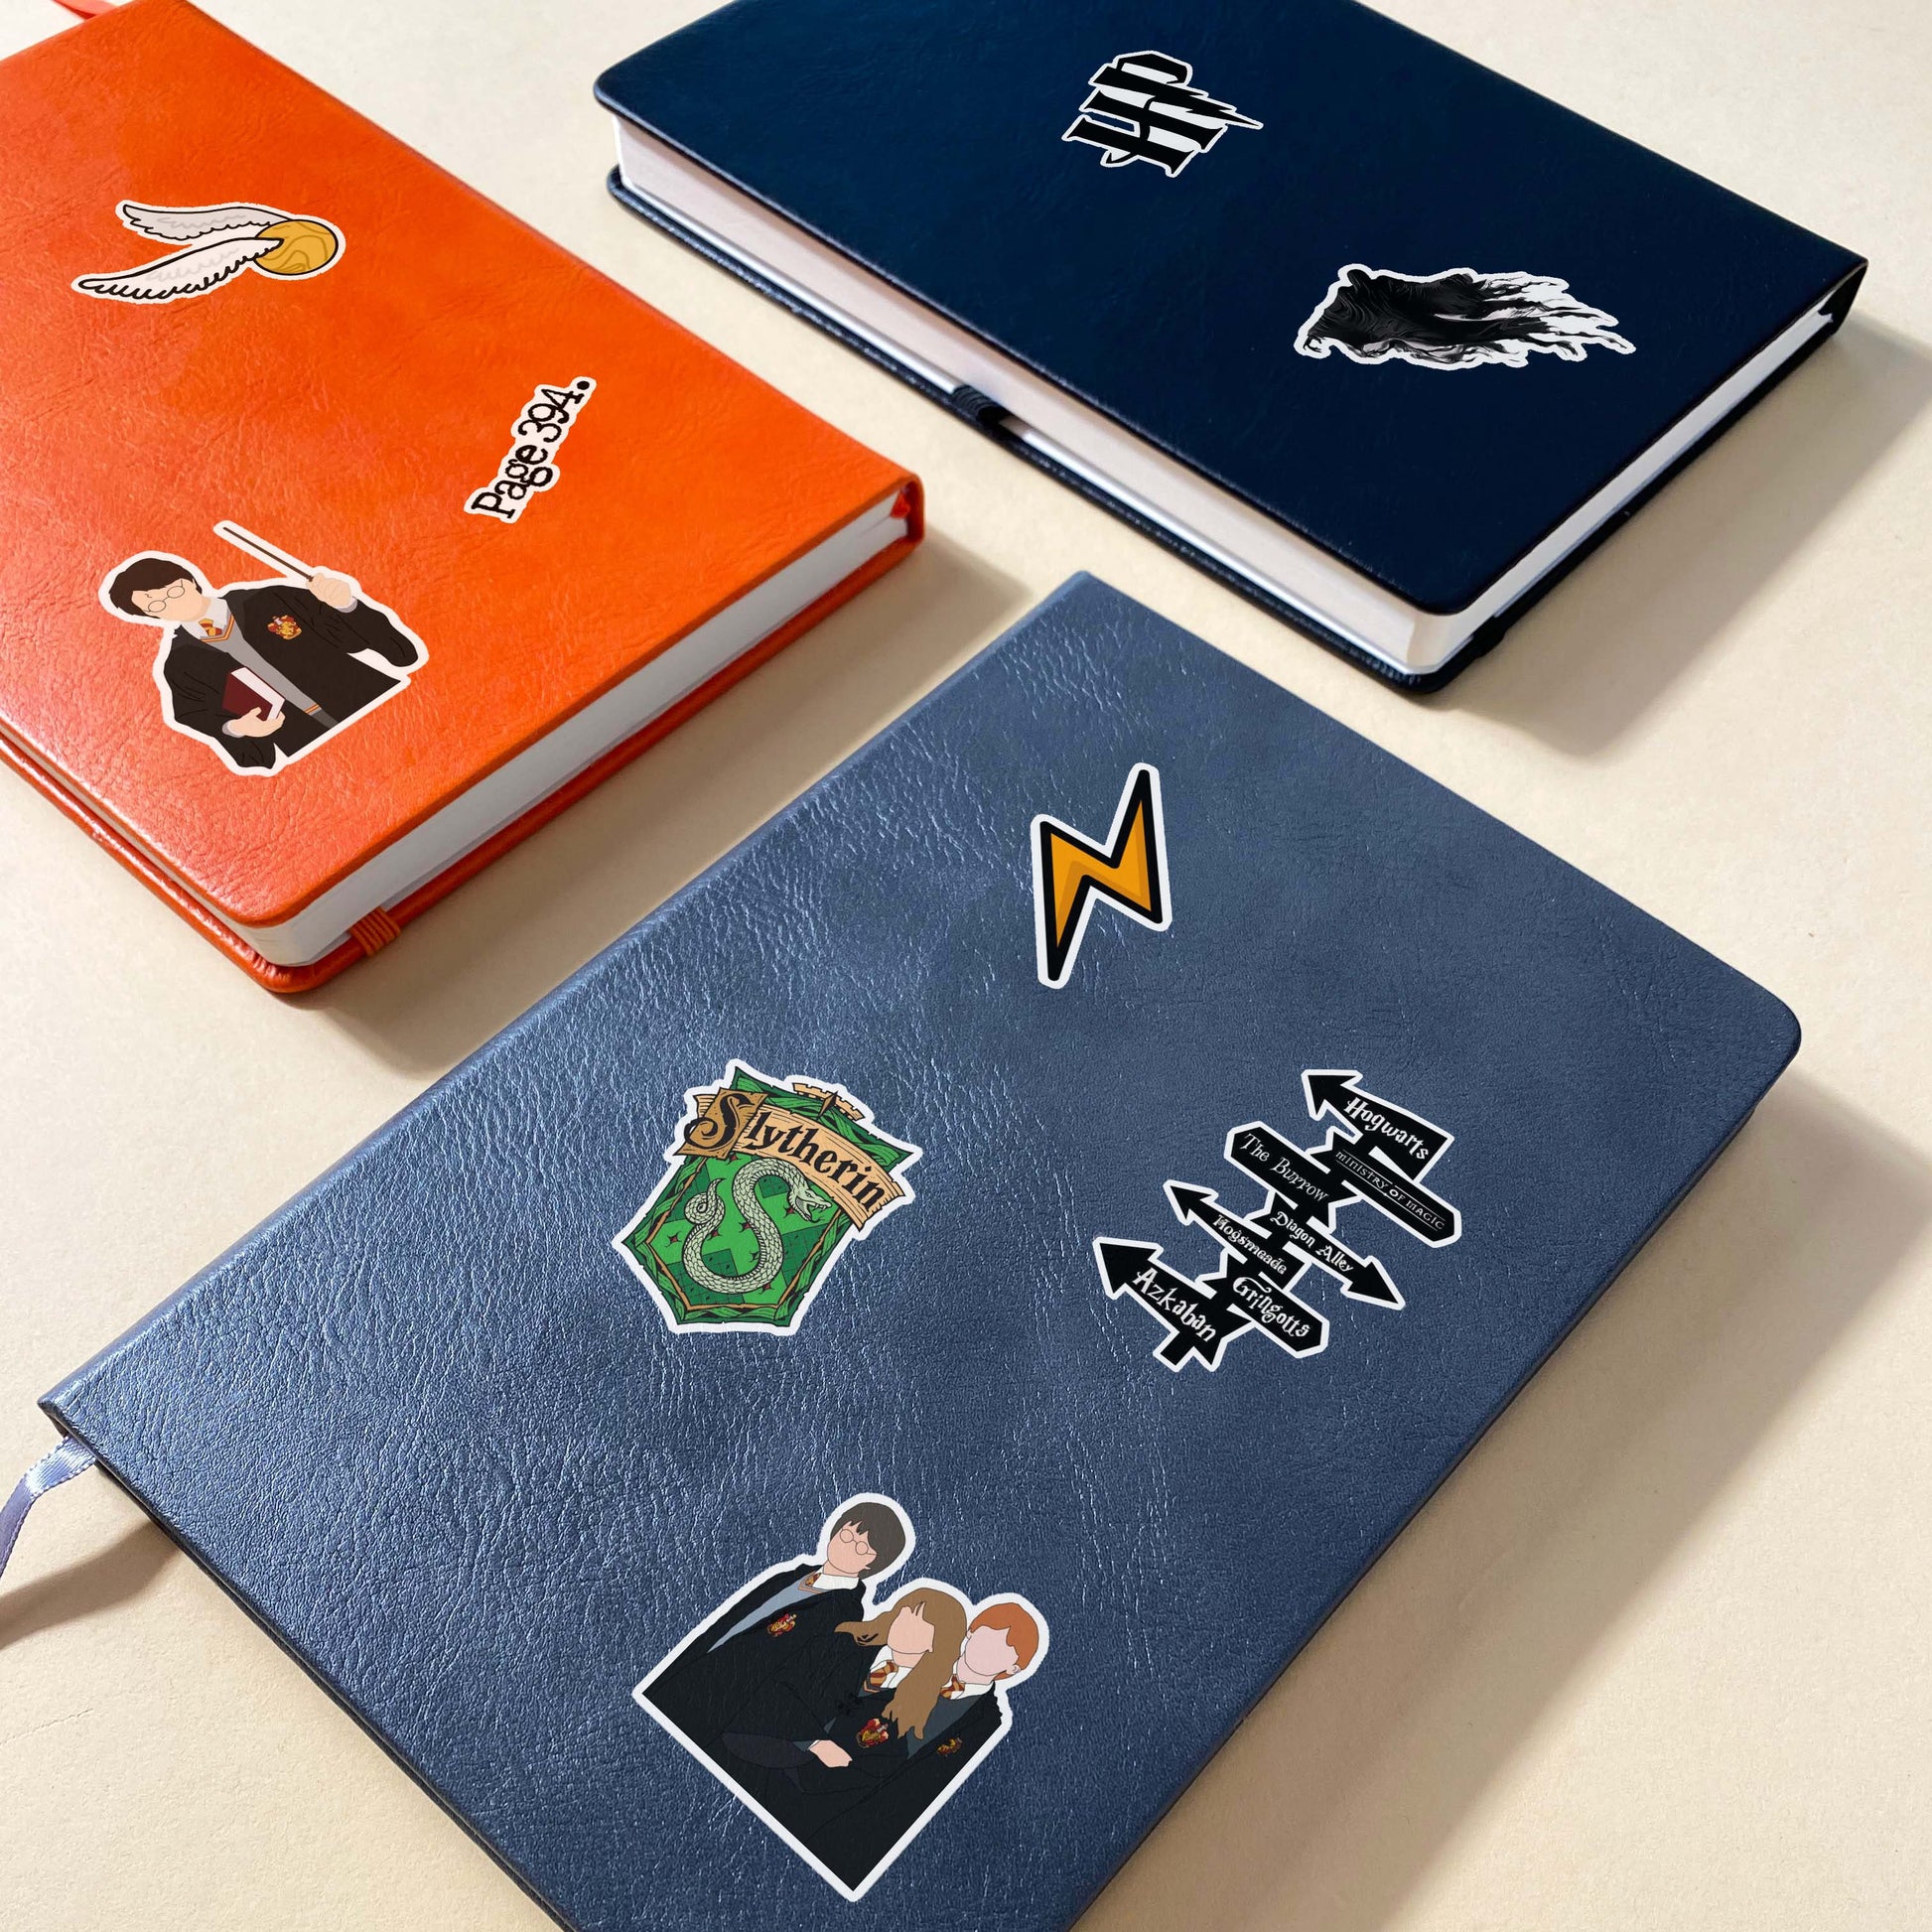 Harry Potter Edition Laptop Sticker Pack Of 57 – Stickerly